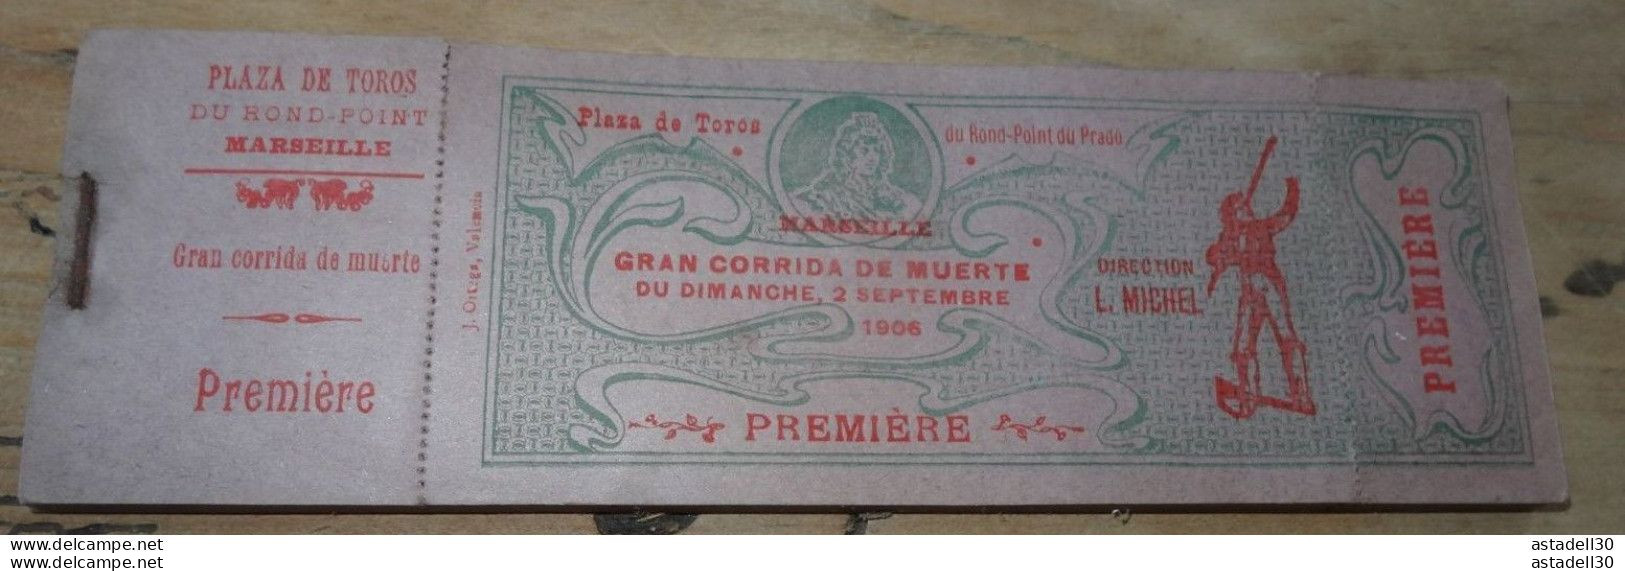 Ticket Entrée GRAN CORRIDA DE MUERTE, 02/09/1906, Plaza De Toros MARSEILLE ............. TIC-COR1..... Caisse9 - Toegangskaarten